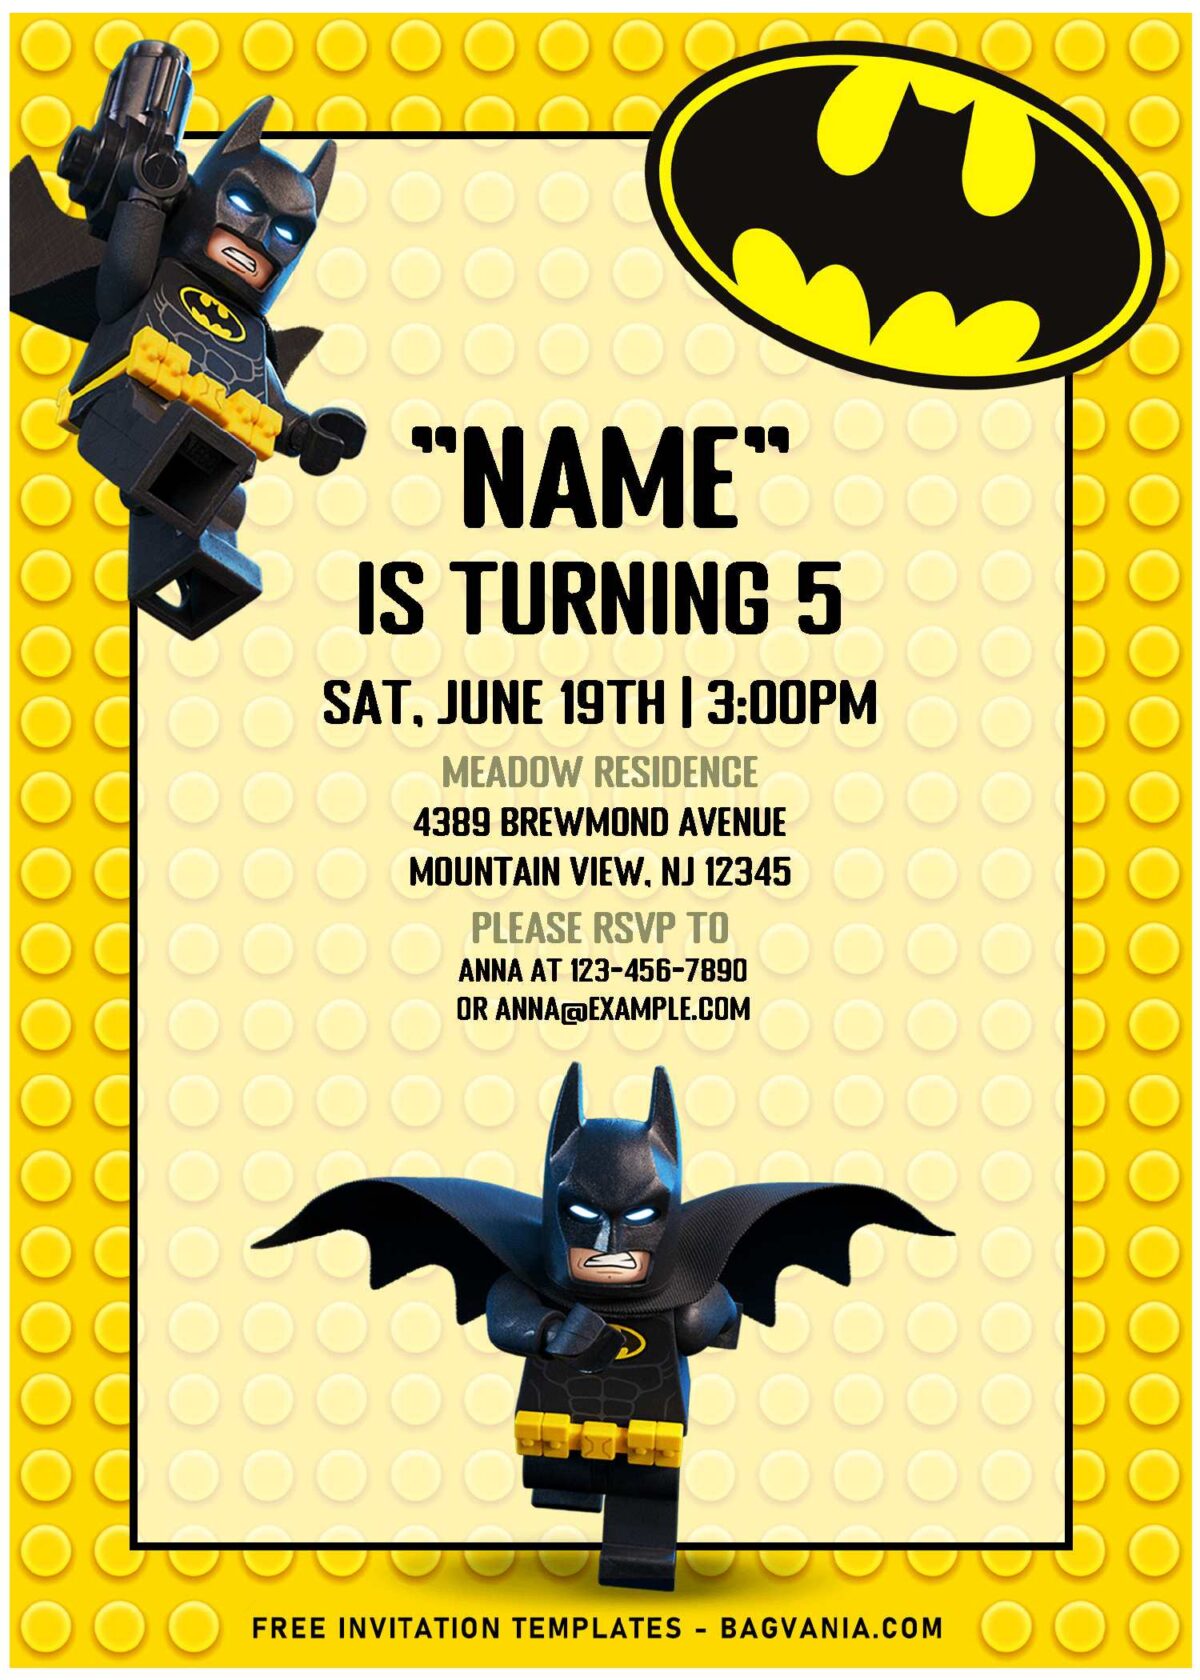 (Free Editable PDF) Super Cool Lego Batman Birthday Invitation Templates with famous Batlogo